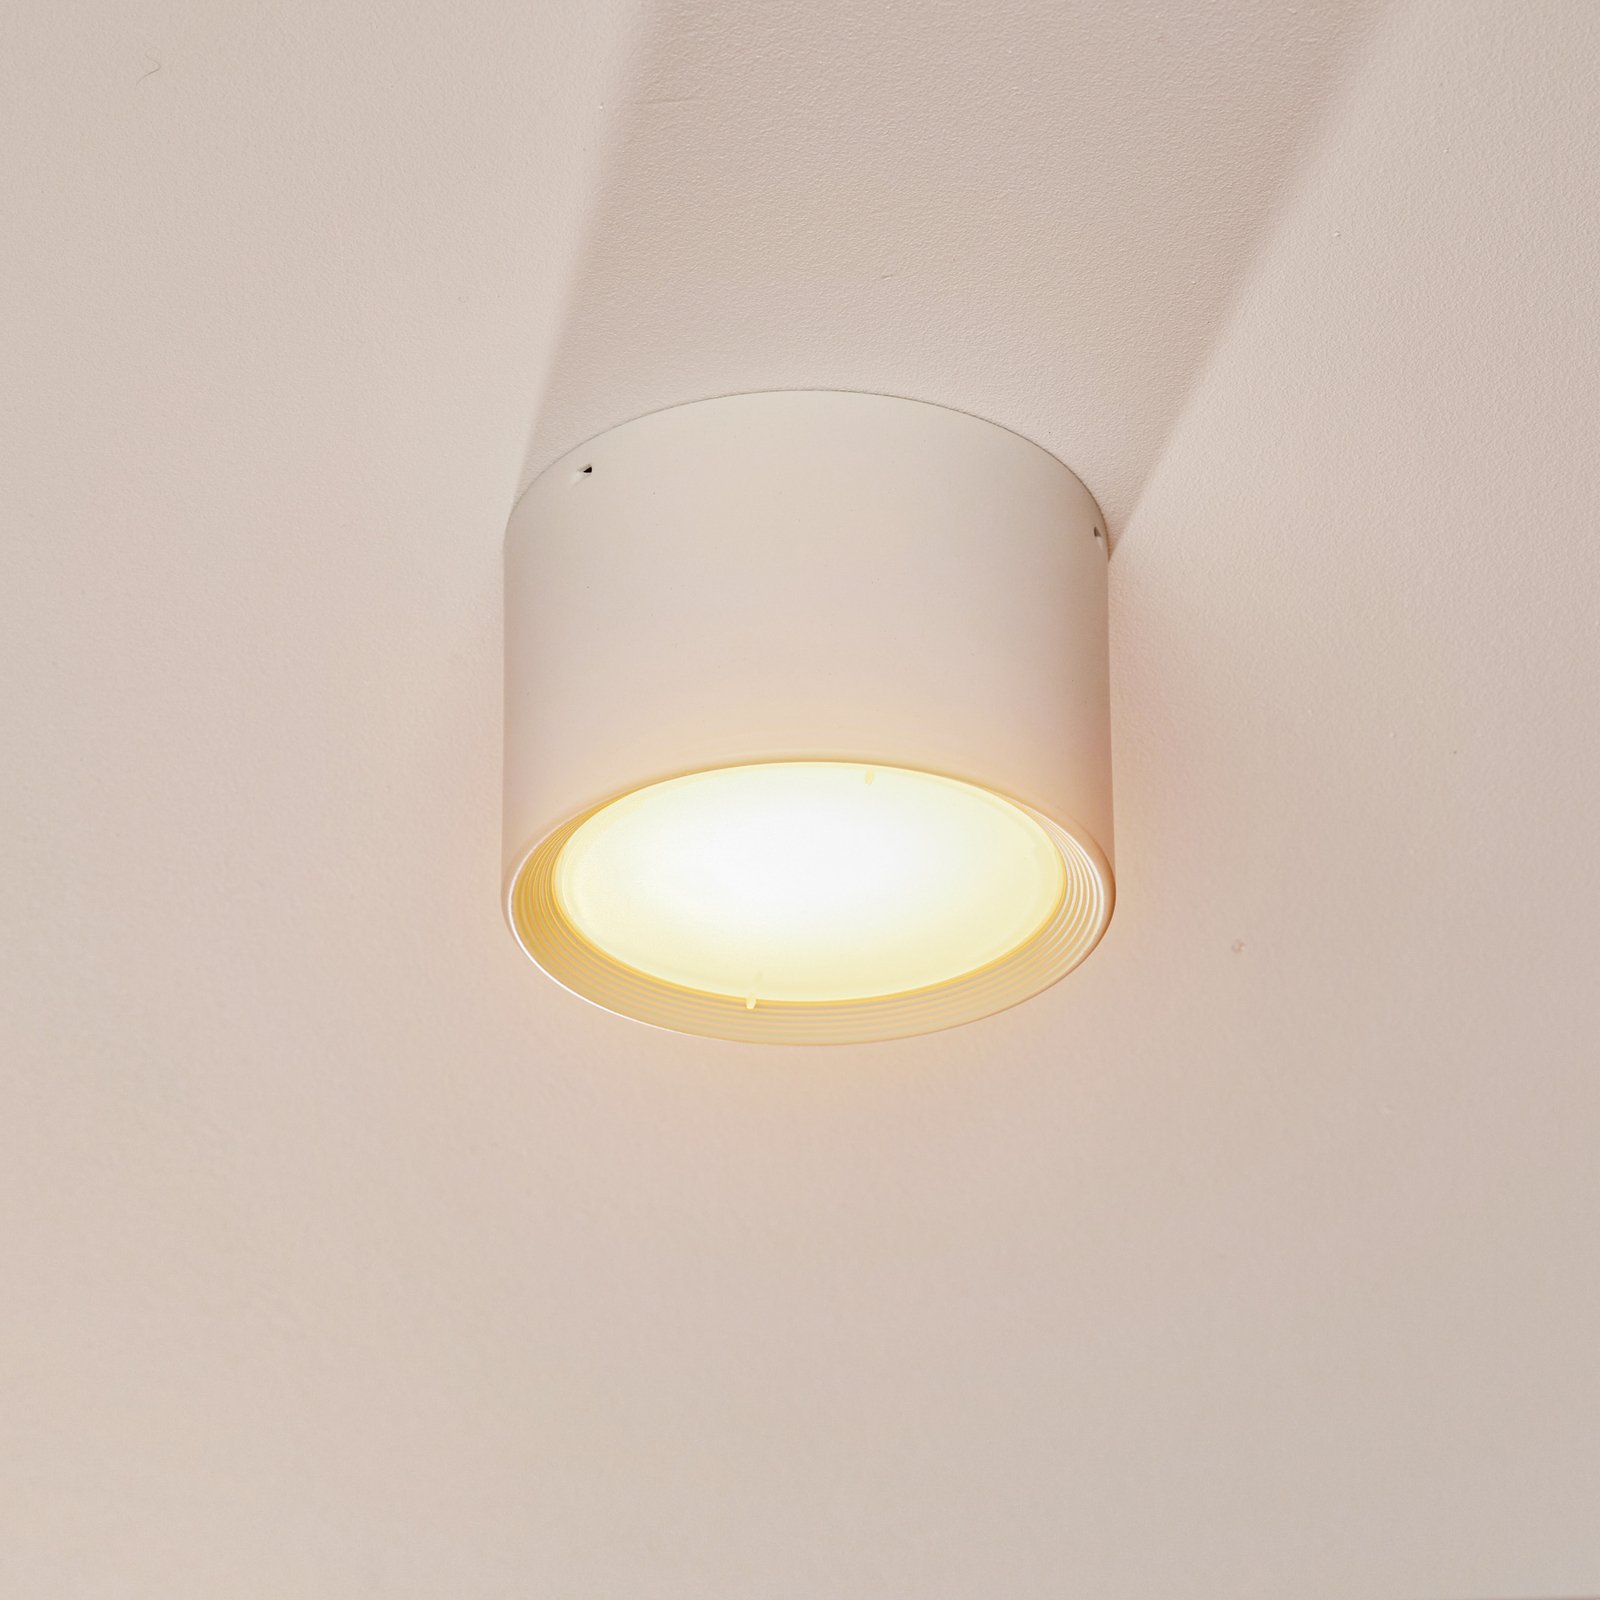 LED downlight Ita en blanc avec diffuseur, Ø 12 cm